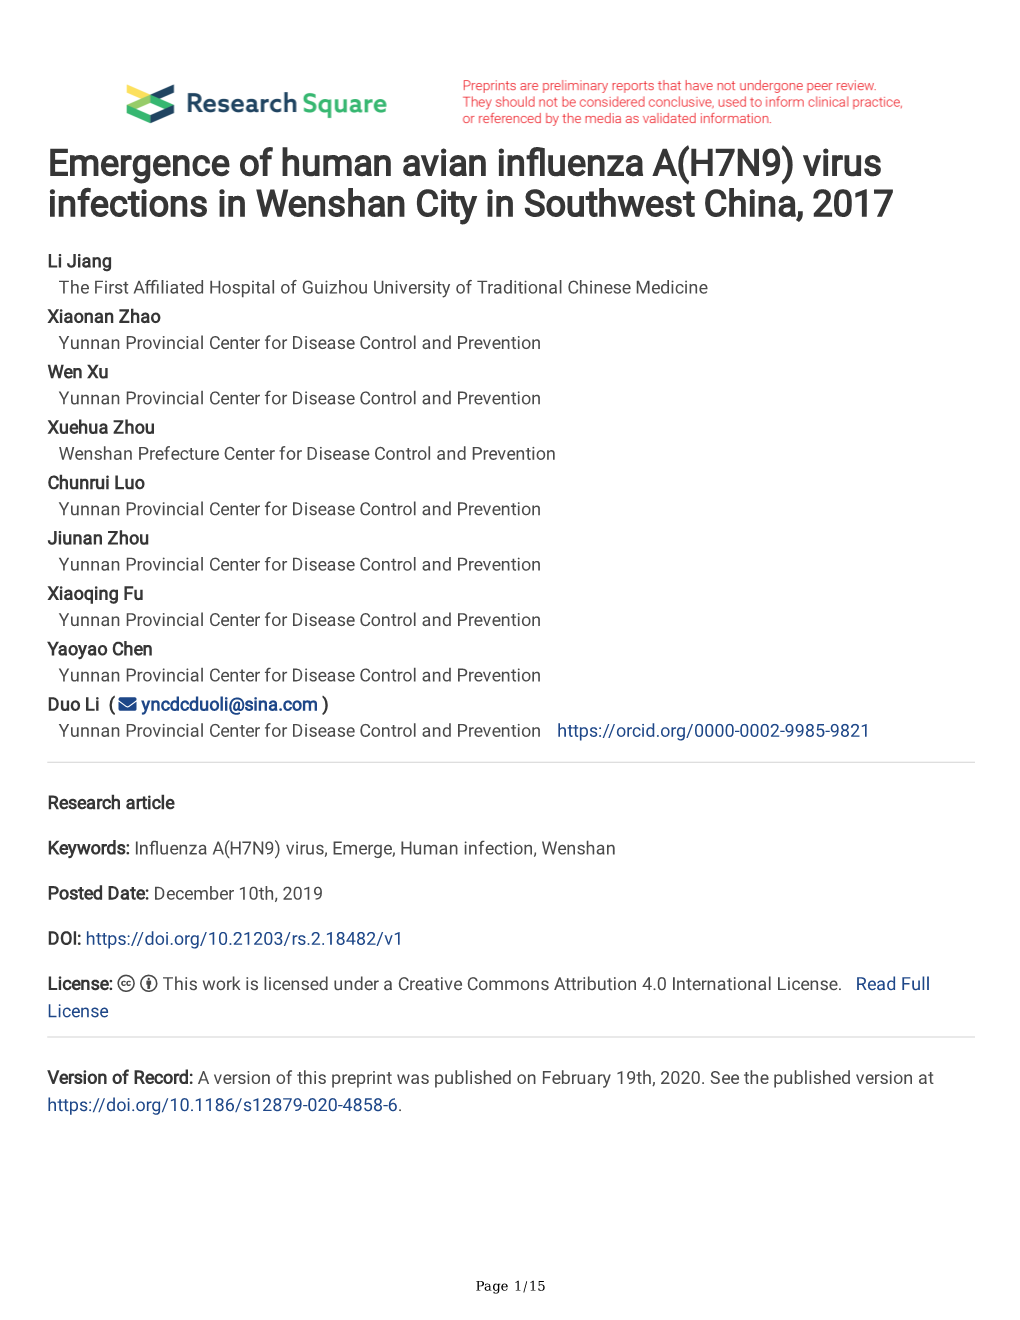 Emergence of Human Avian Influenza A(H7N9)